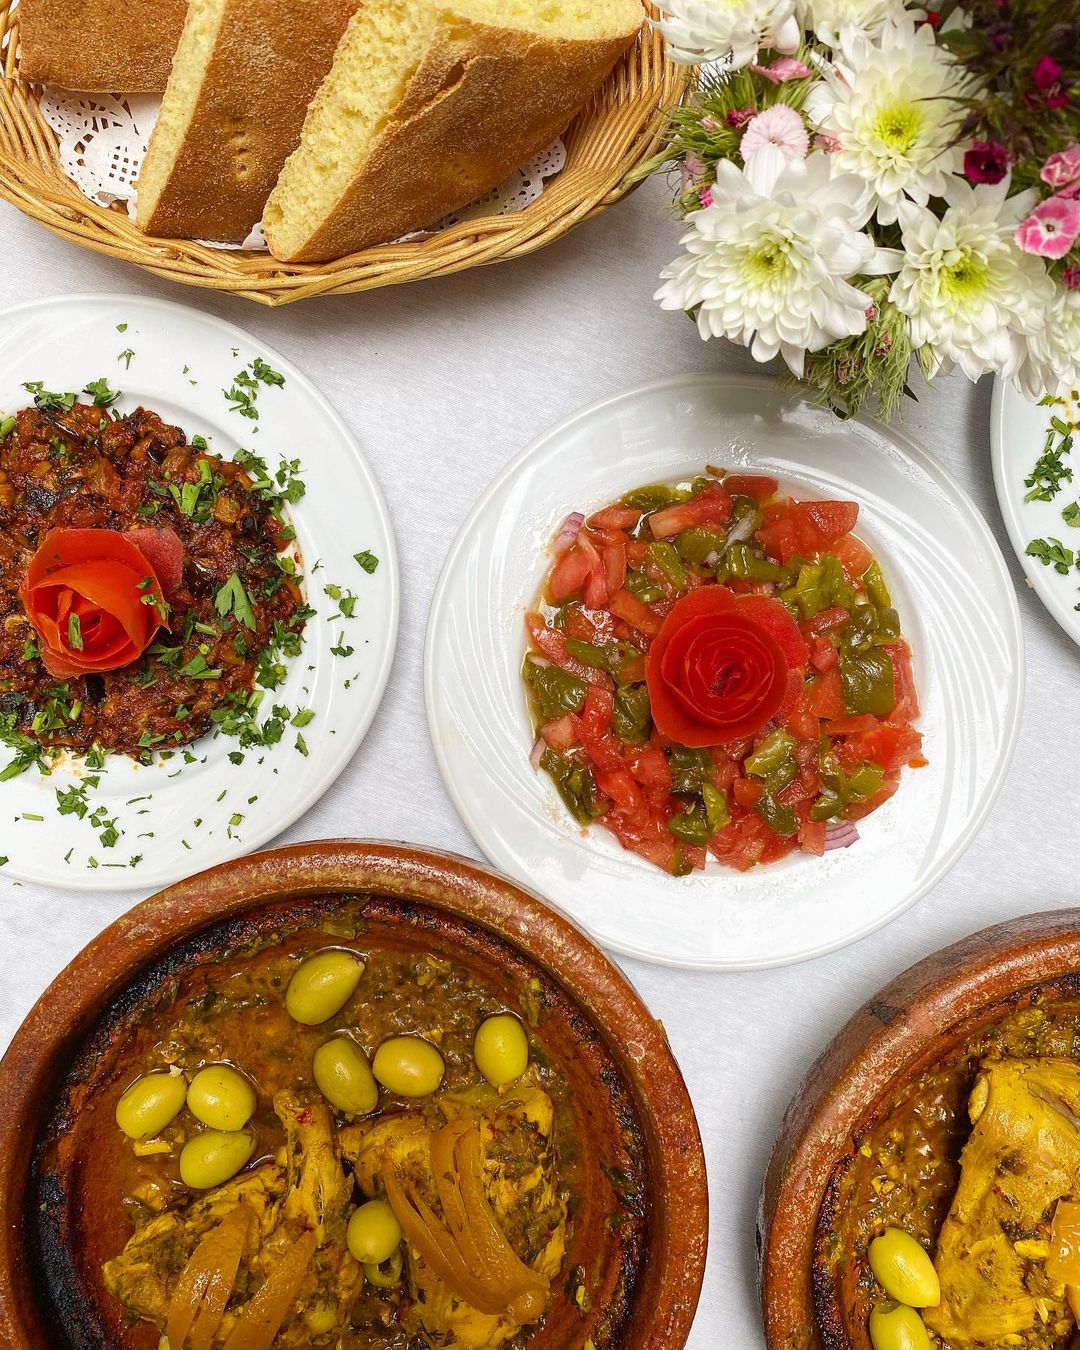 Moroccan Food